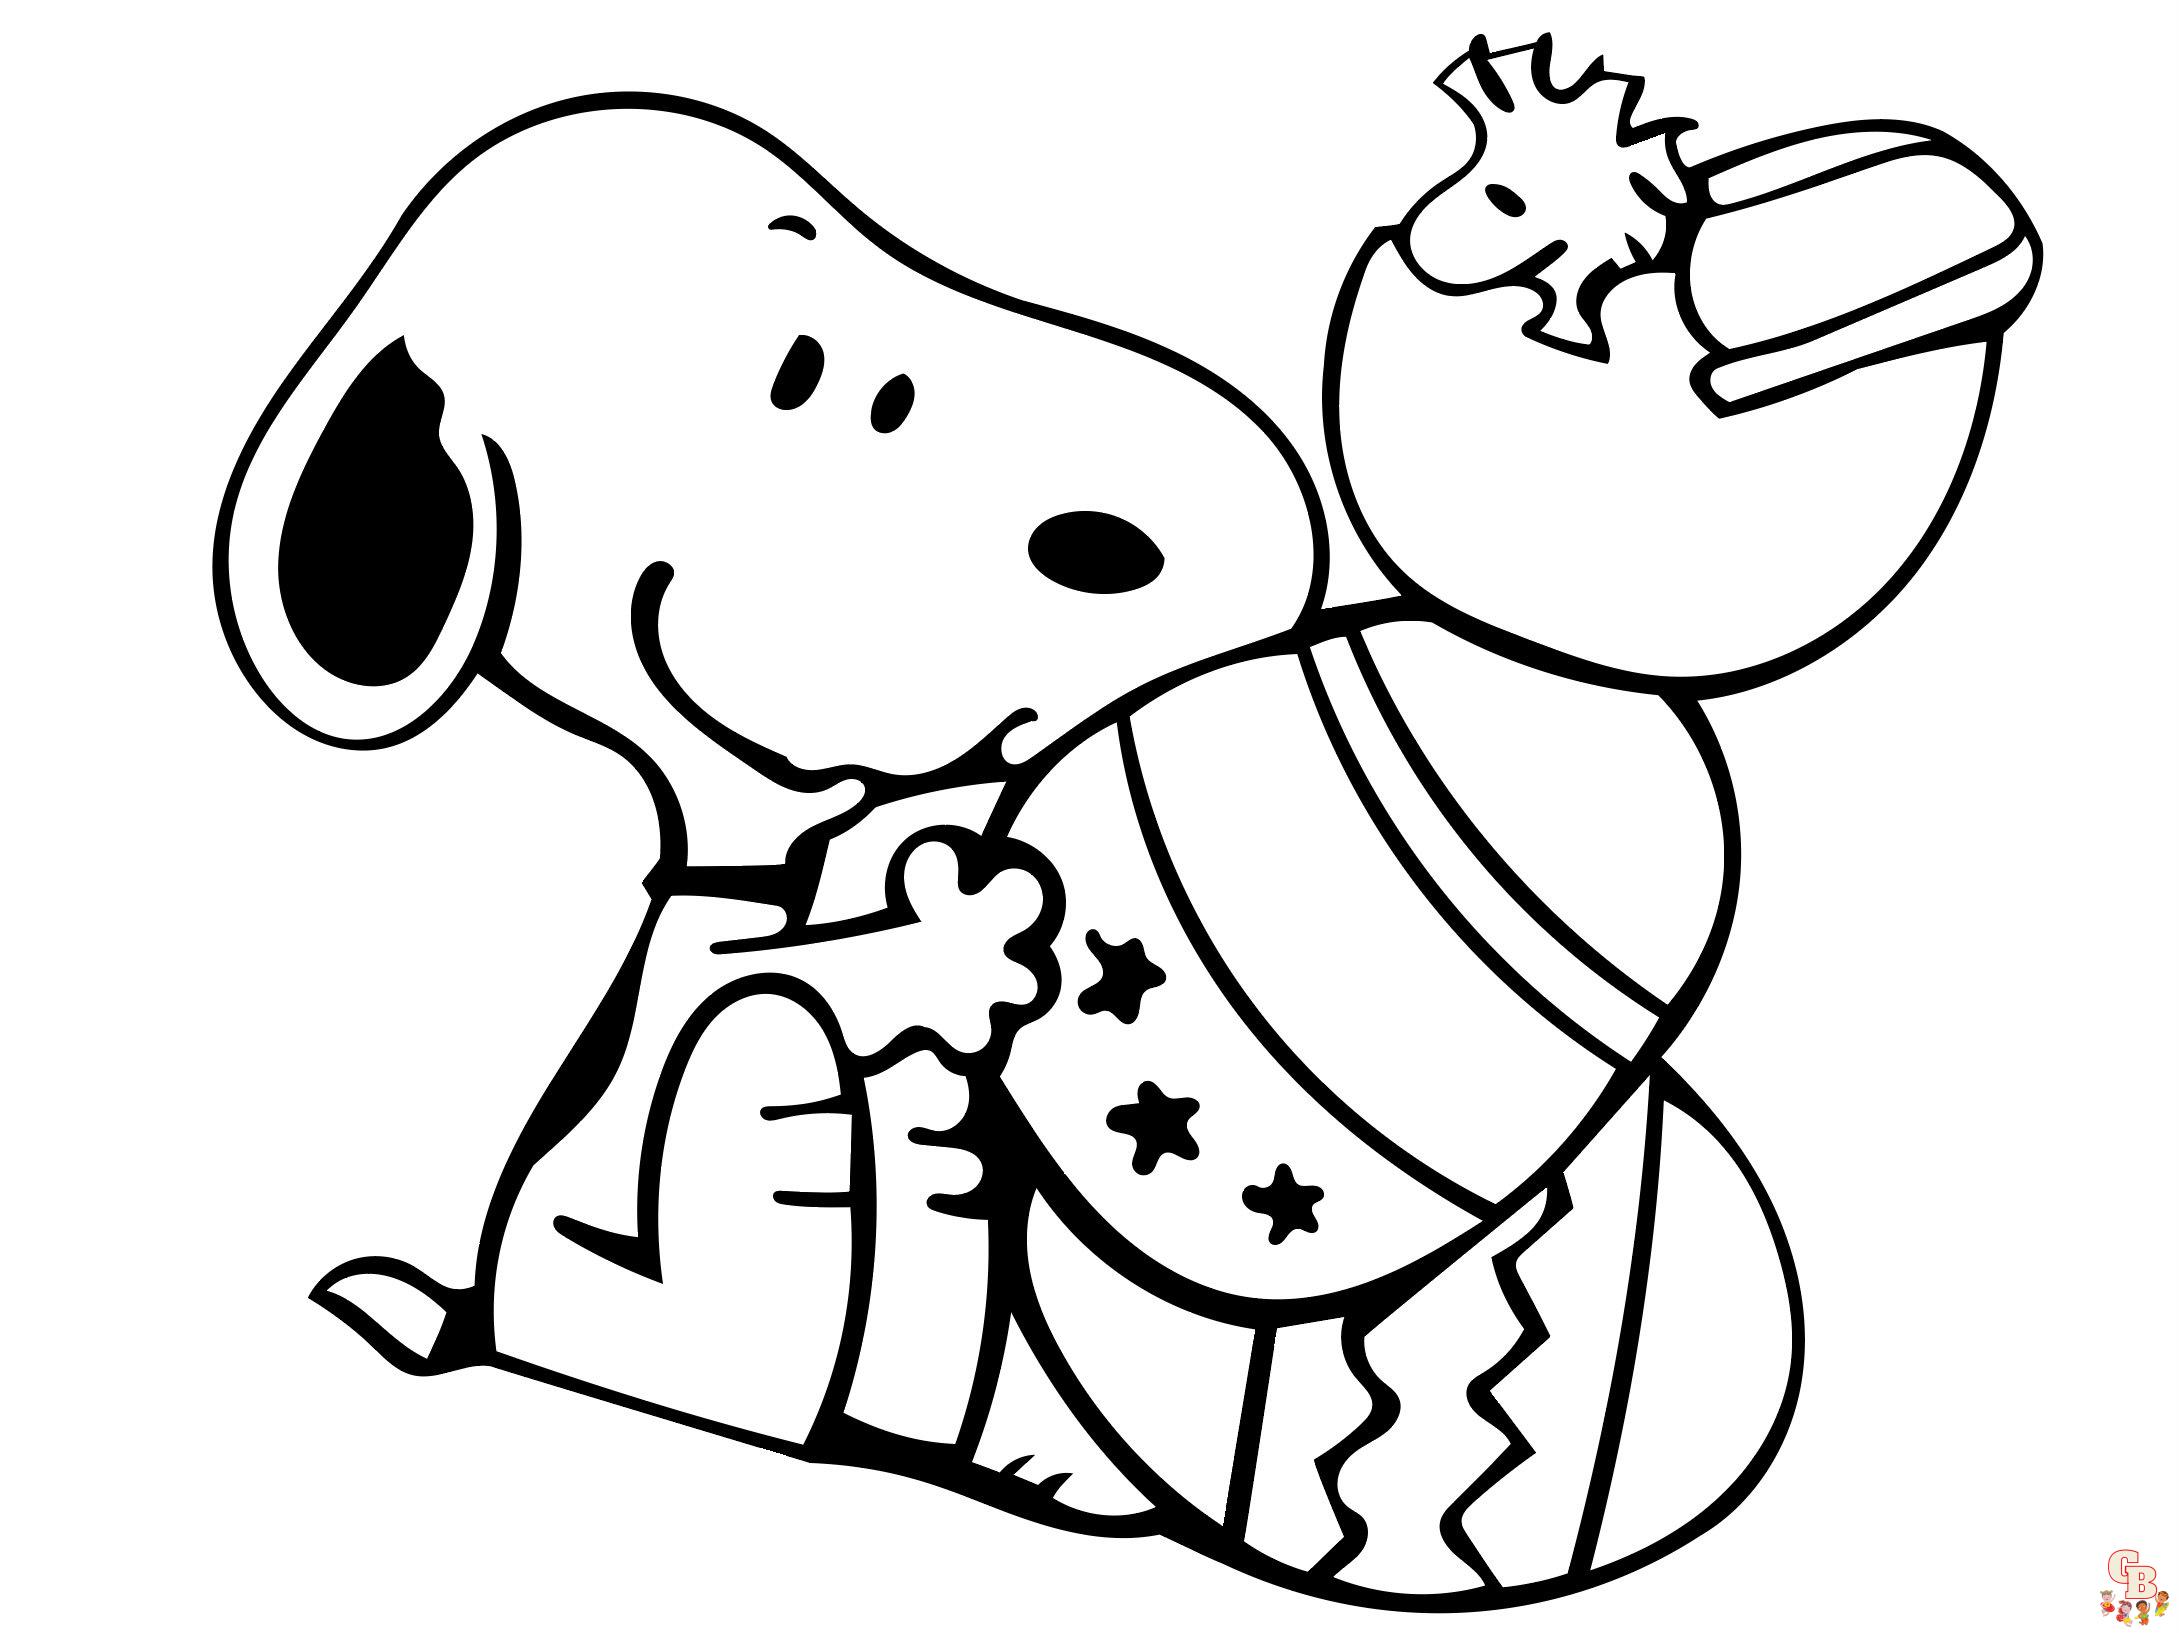 Malvorlagen Snoopy